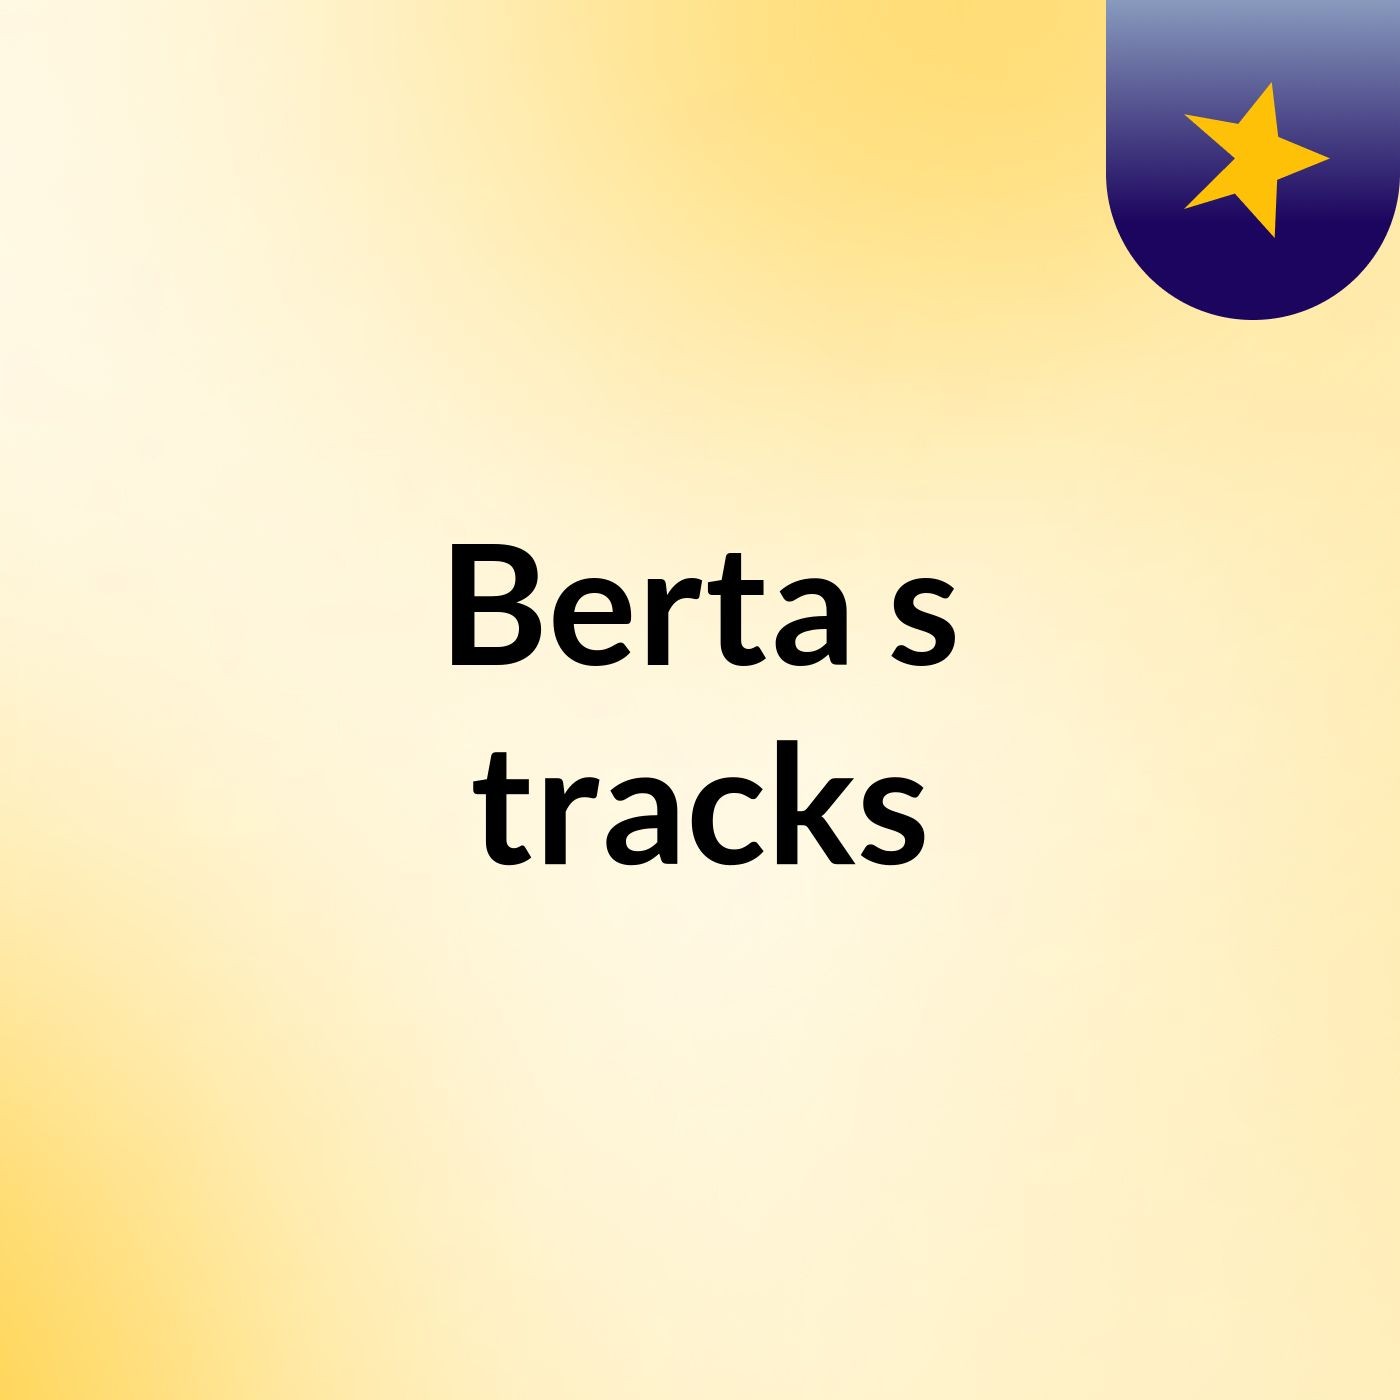 Berta's tracks